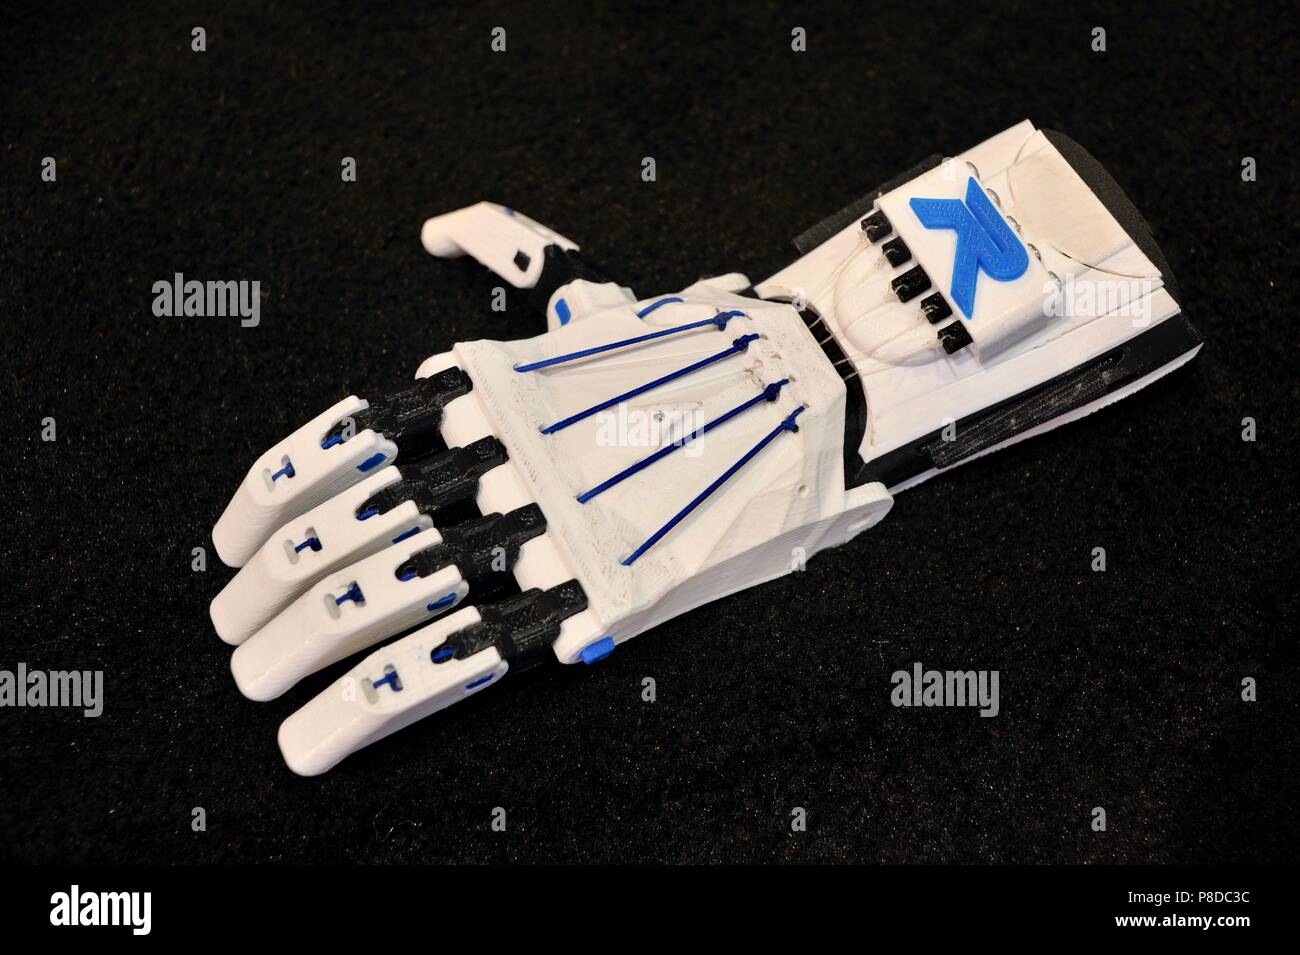 3-D mano protésica impresos producidos y a mostrar en el CES (Consumer Electronics Show) de Robo 3D caseta, Las Vegas, Nevada, EE.UU. Foto de stock